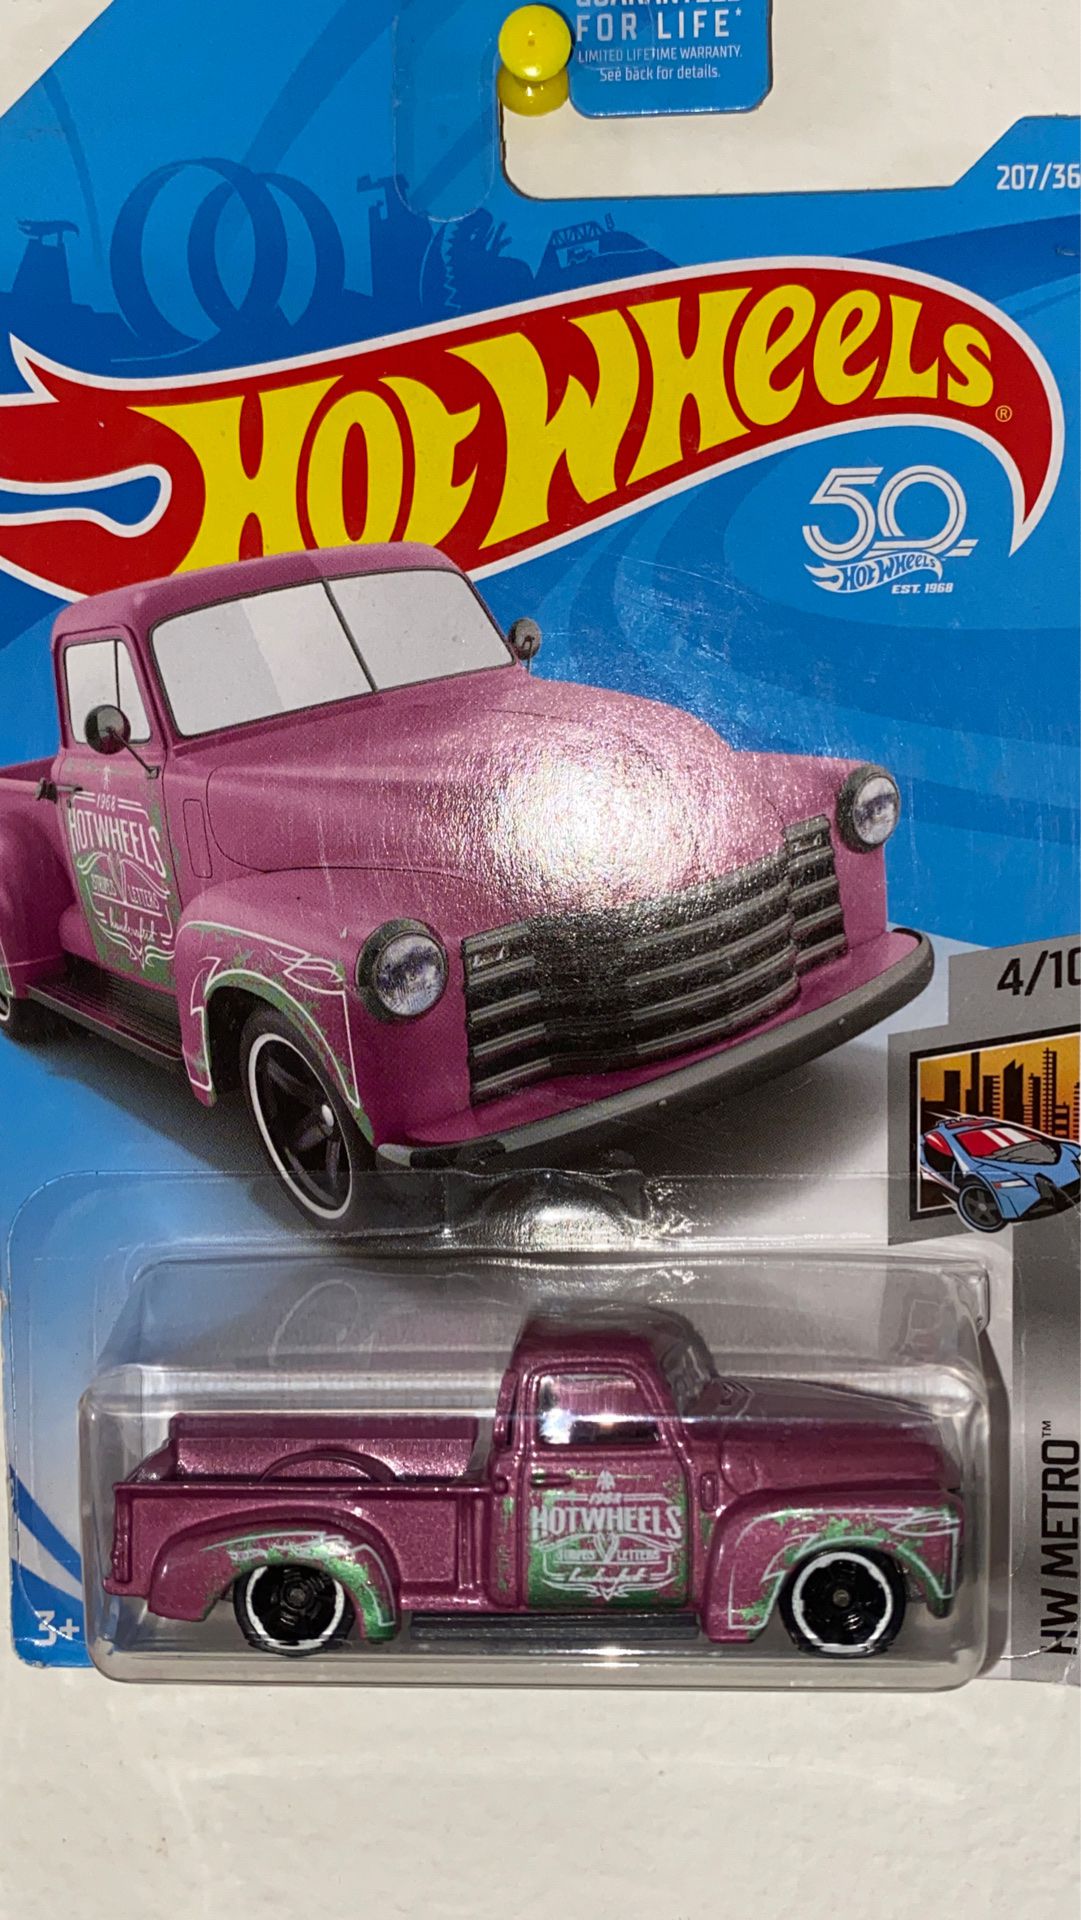 Hot wheels ‘52 Chevy 4/10